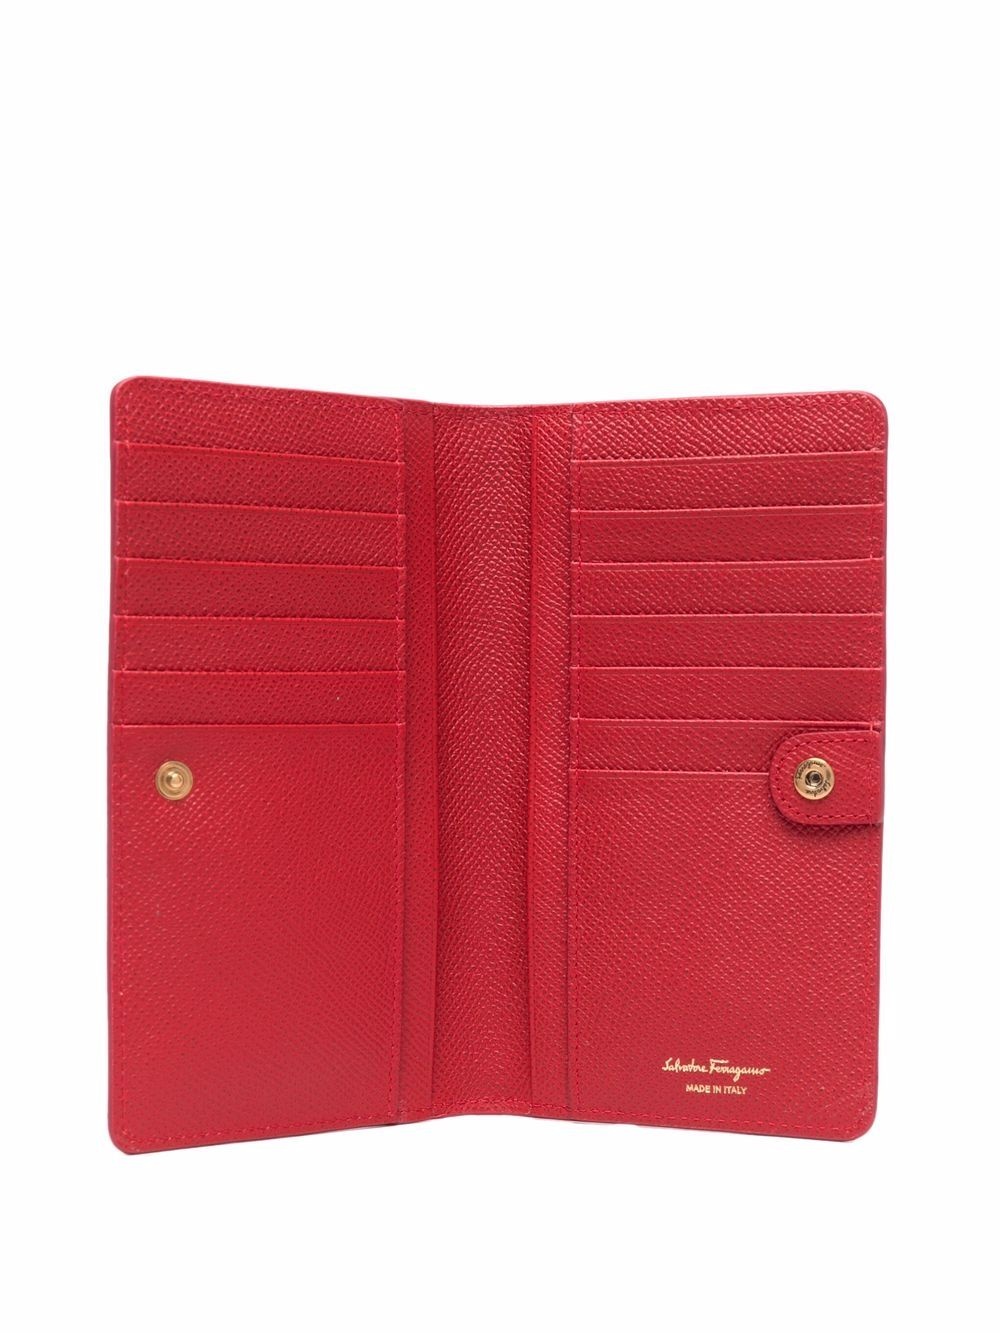 Gancini long leather wallet - 3